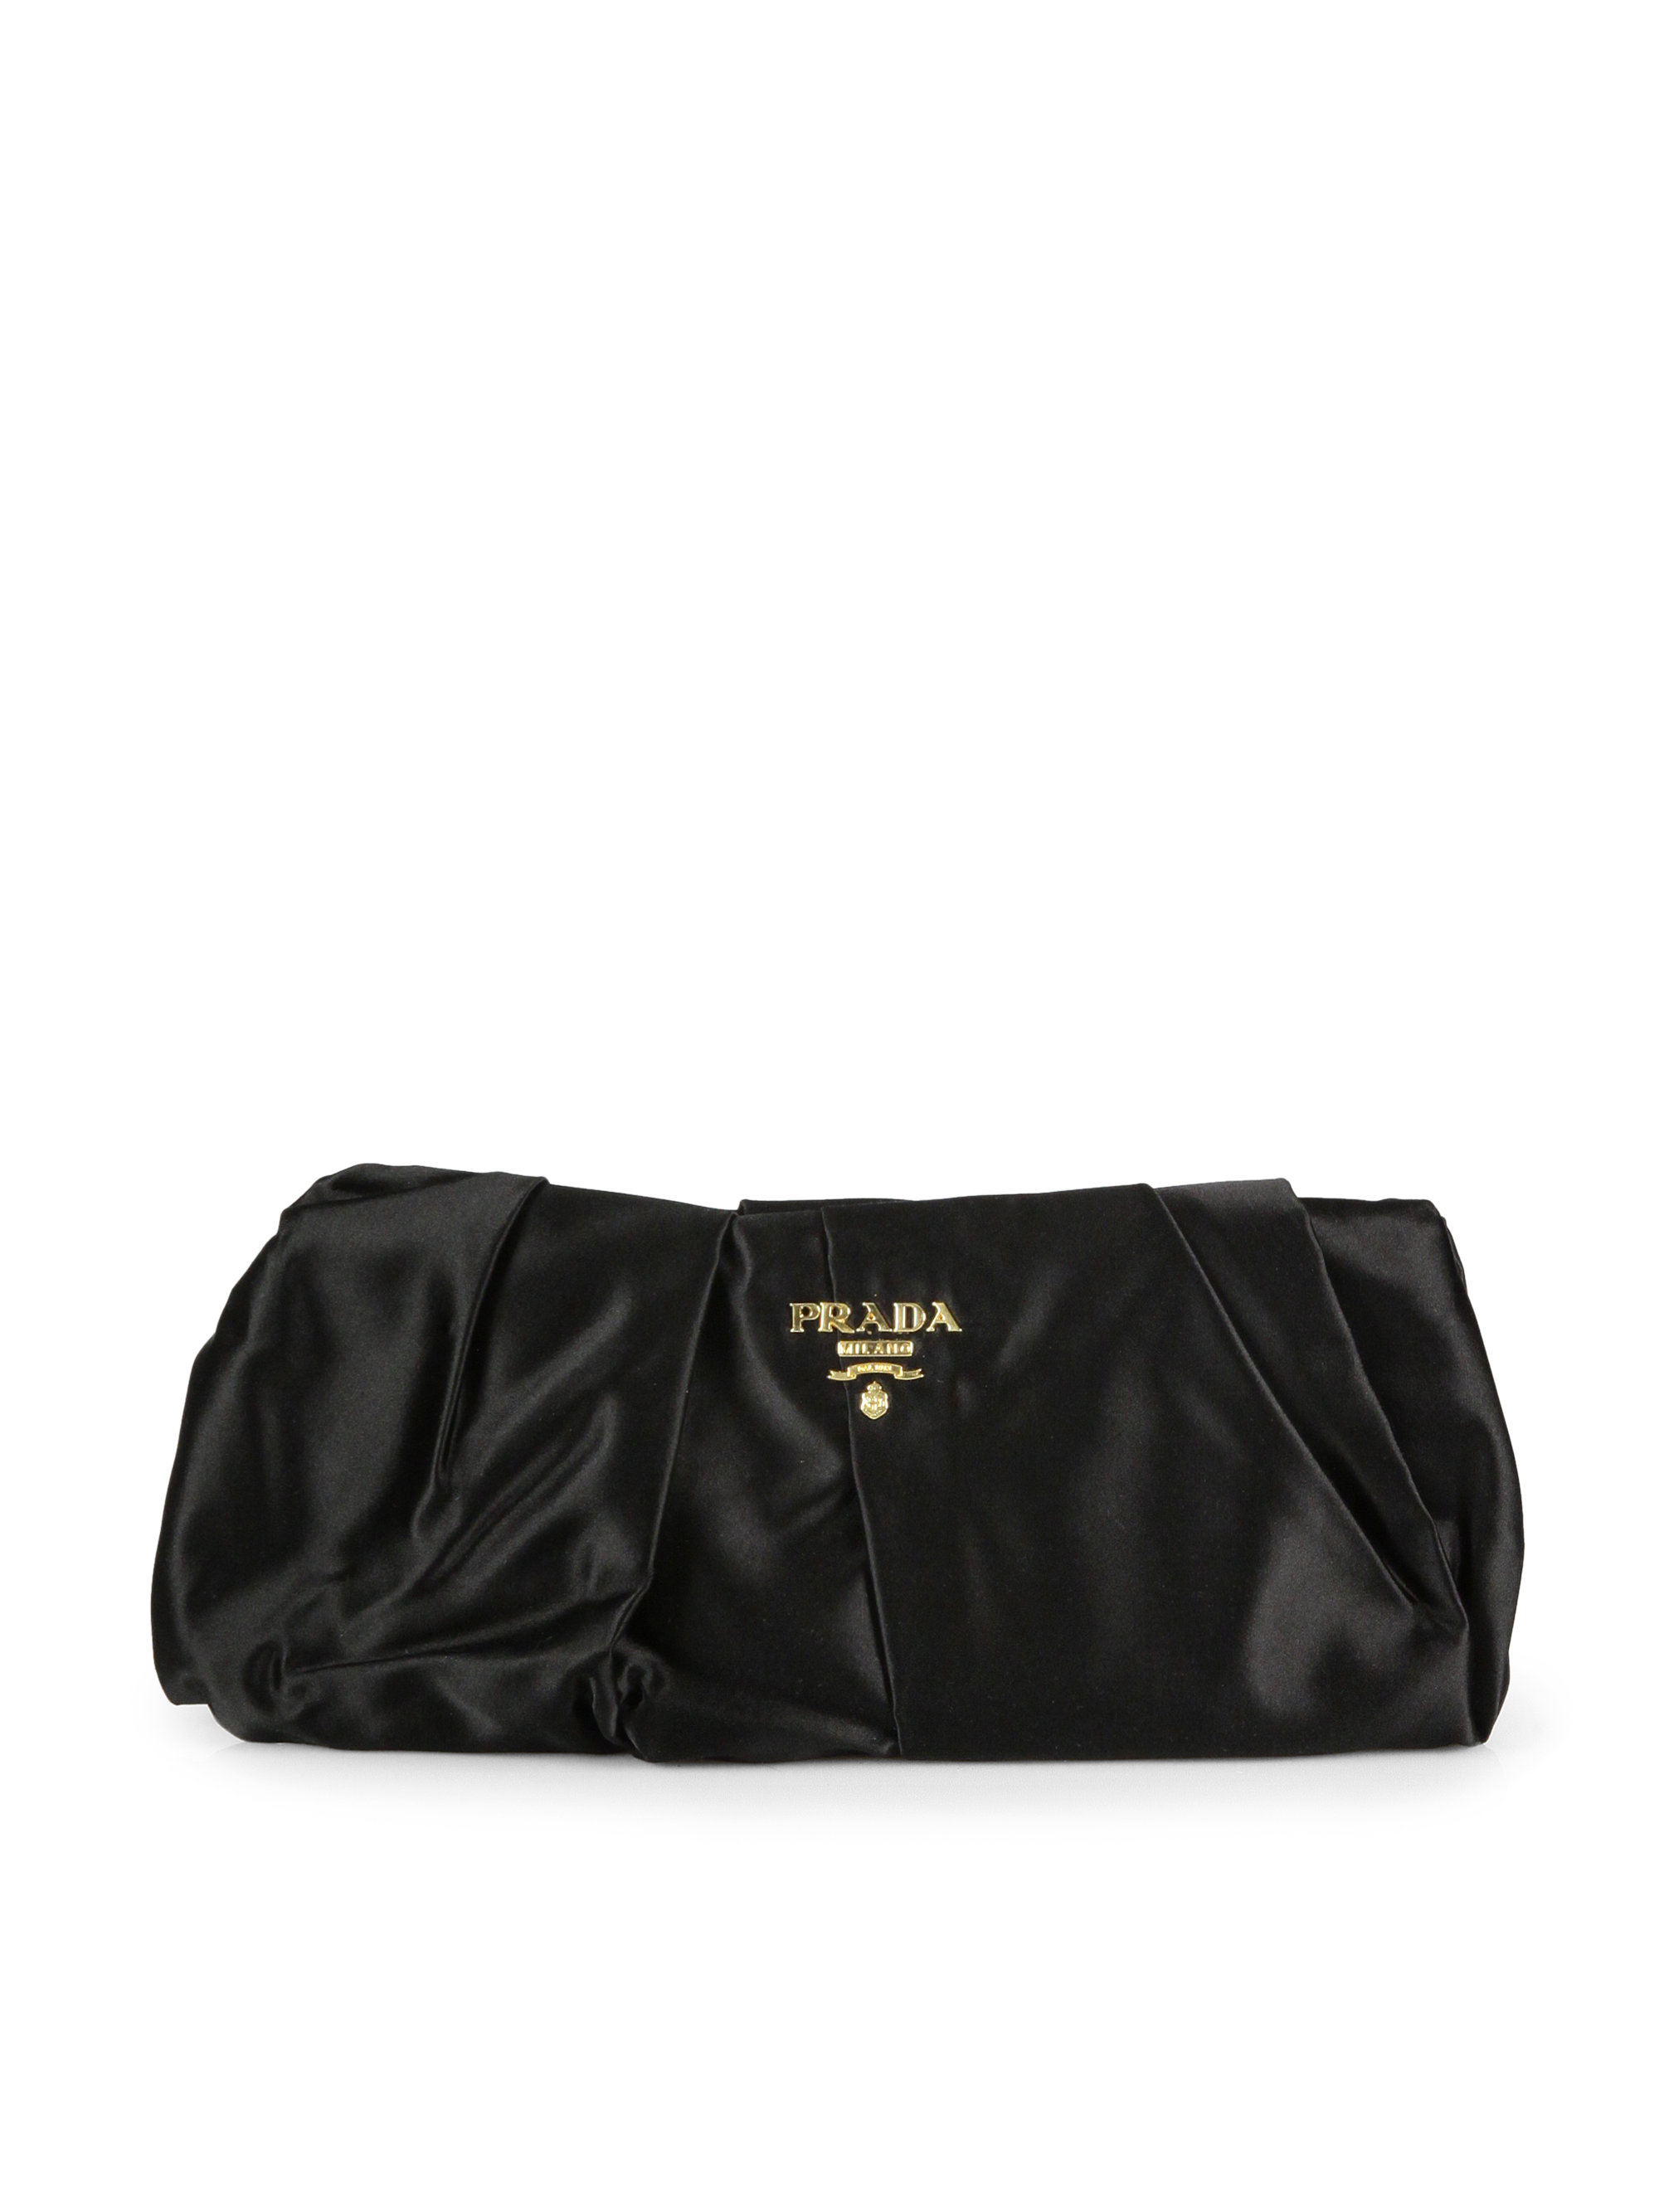 prada saffiano vernice tote bag - Prada Pleated Satin Clutch in Black (nero-black) | Lyst